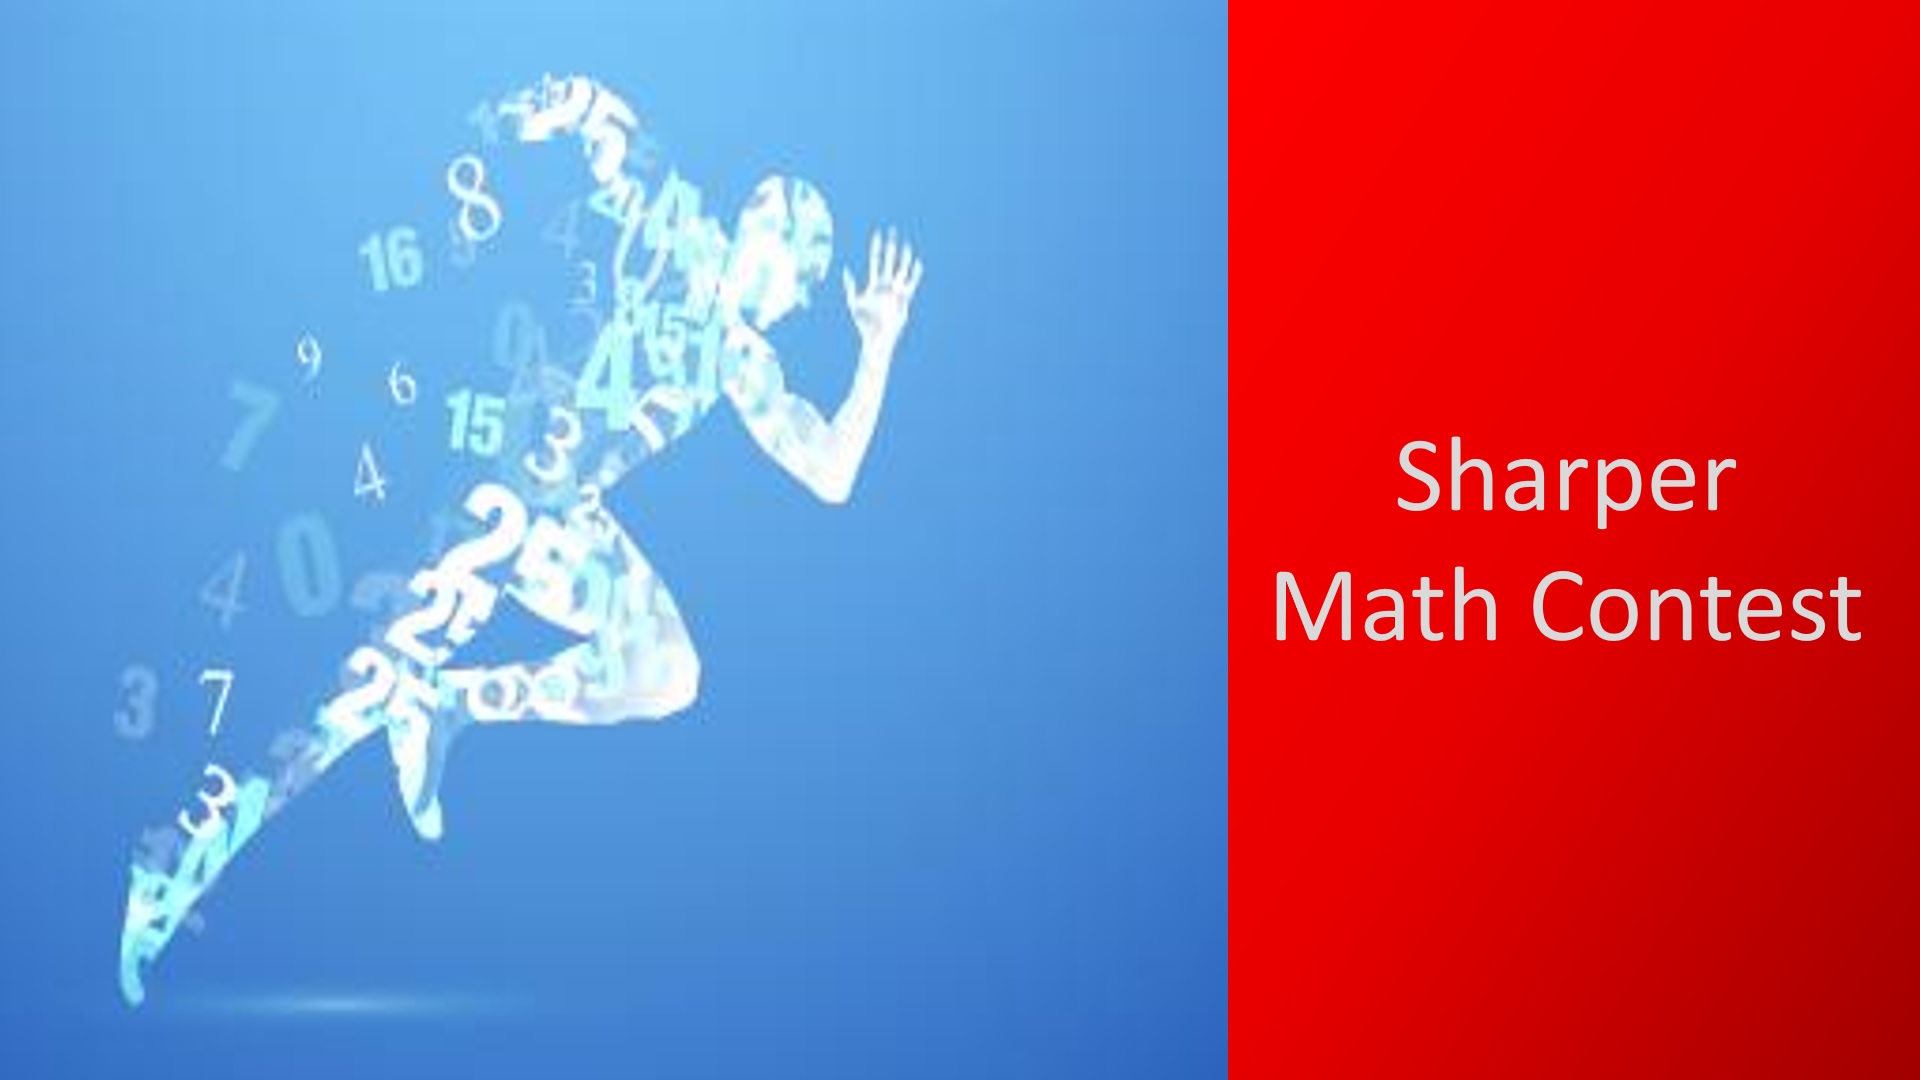 Sharper math